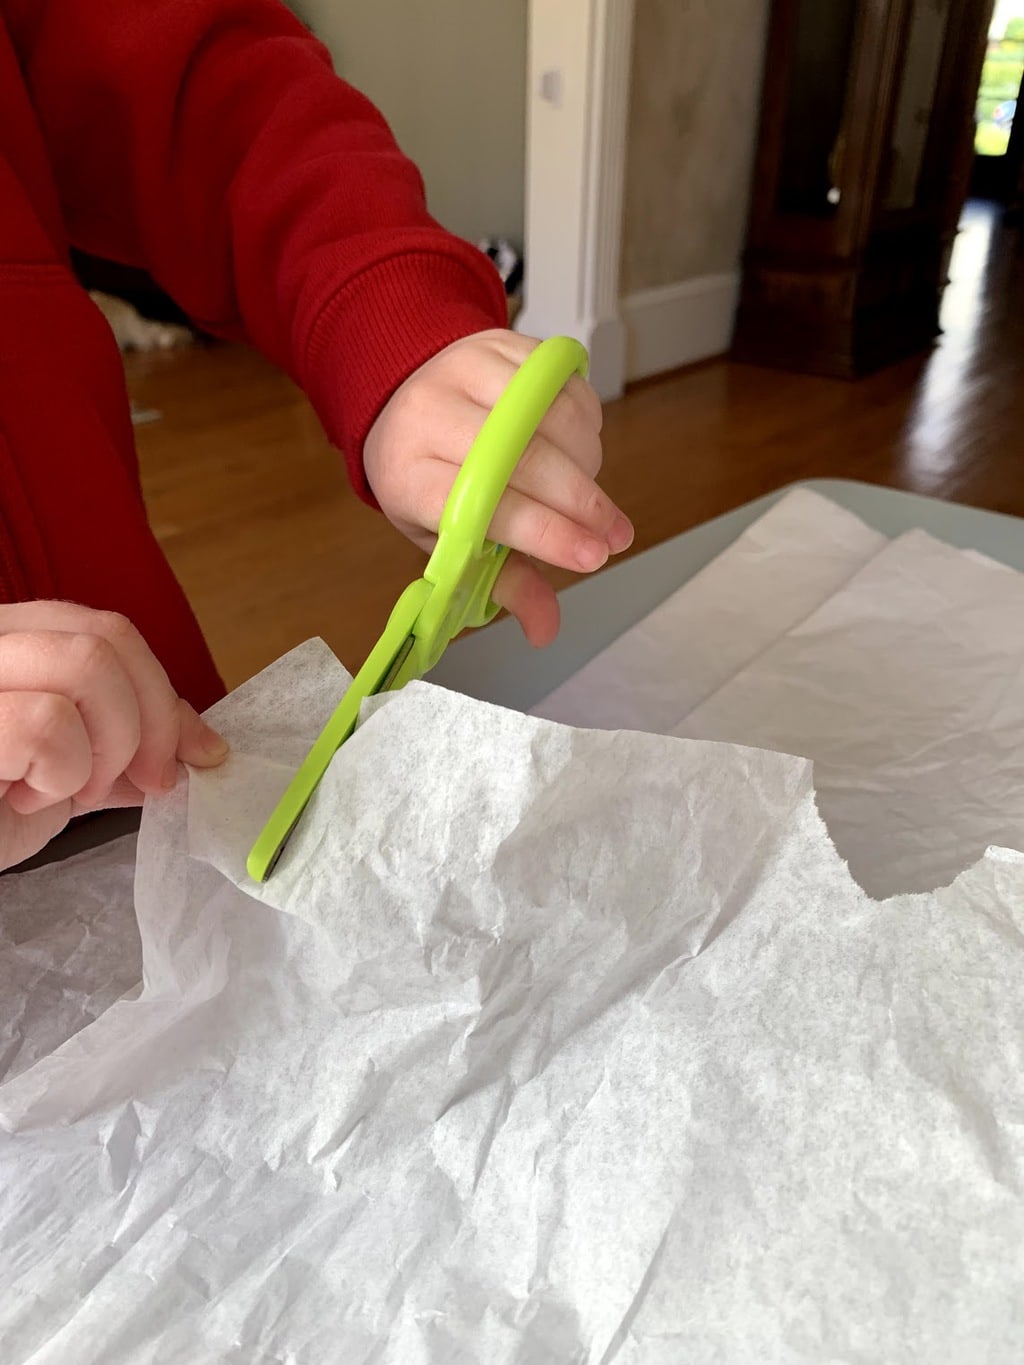 Child cutting white tissue paper